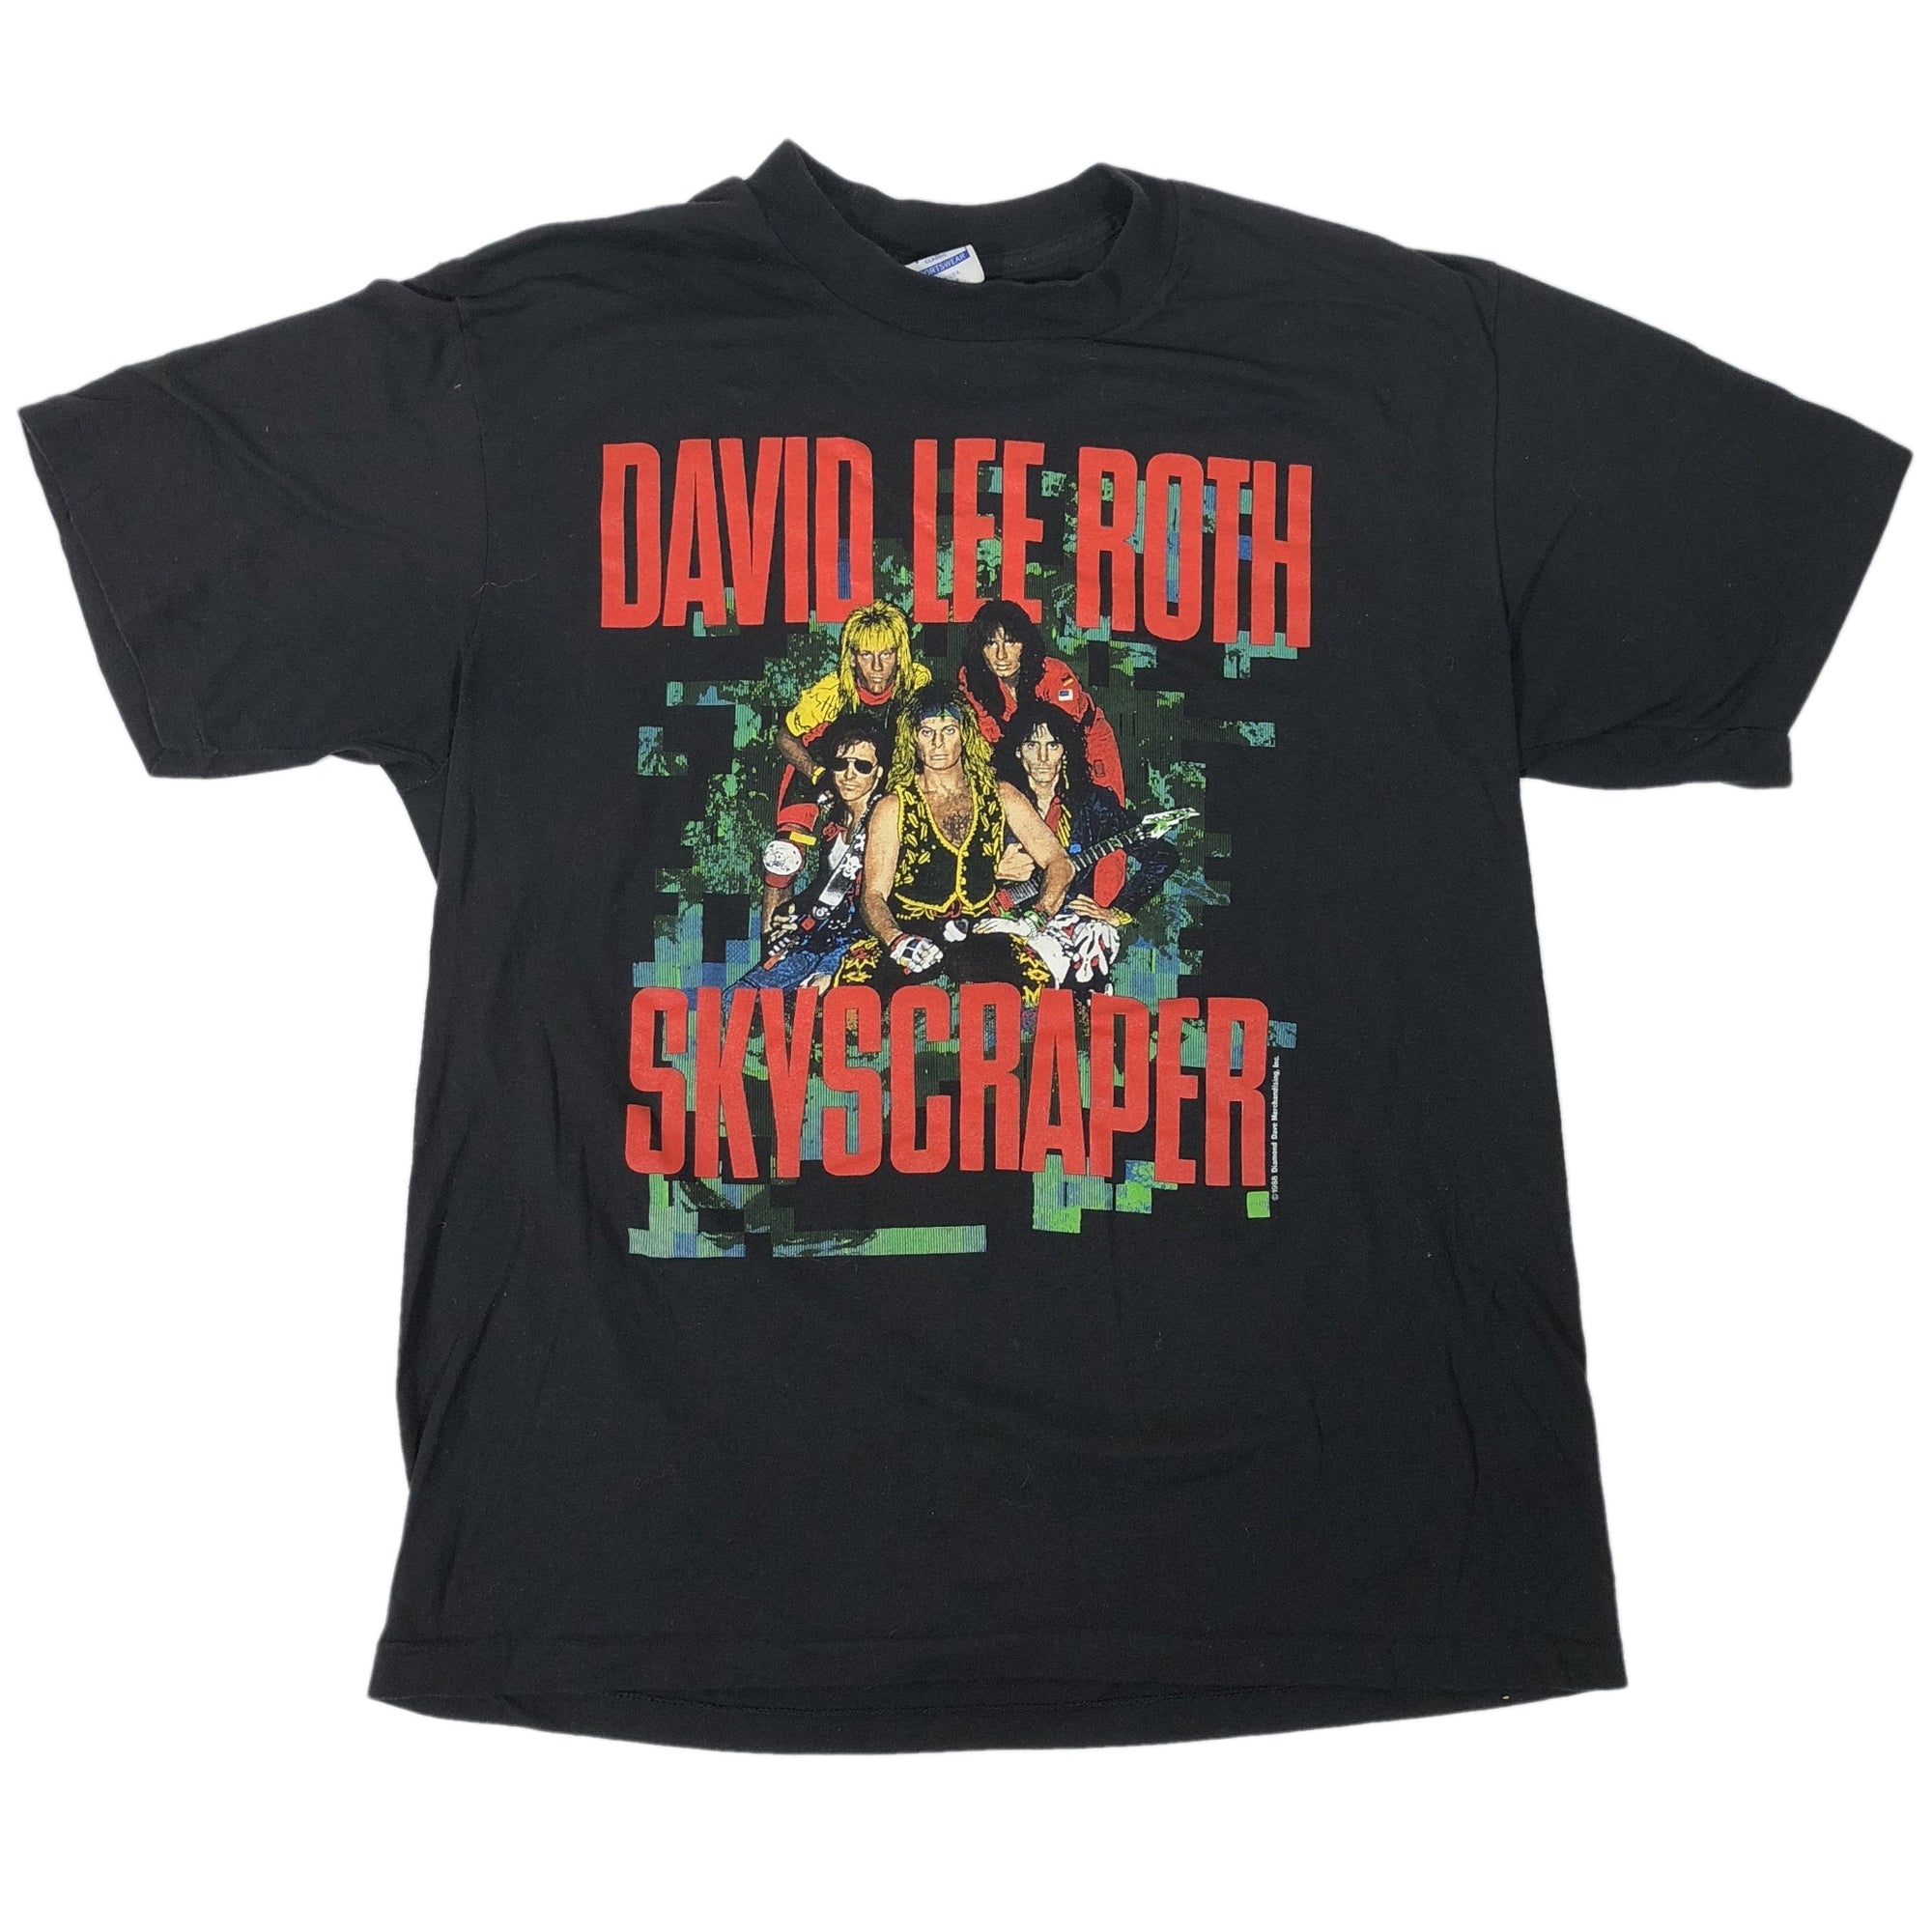 Vintage David Lee Roth "Skyscrapers" T-Shirt - jointcustodydc